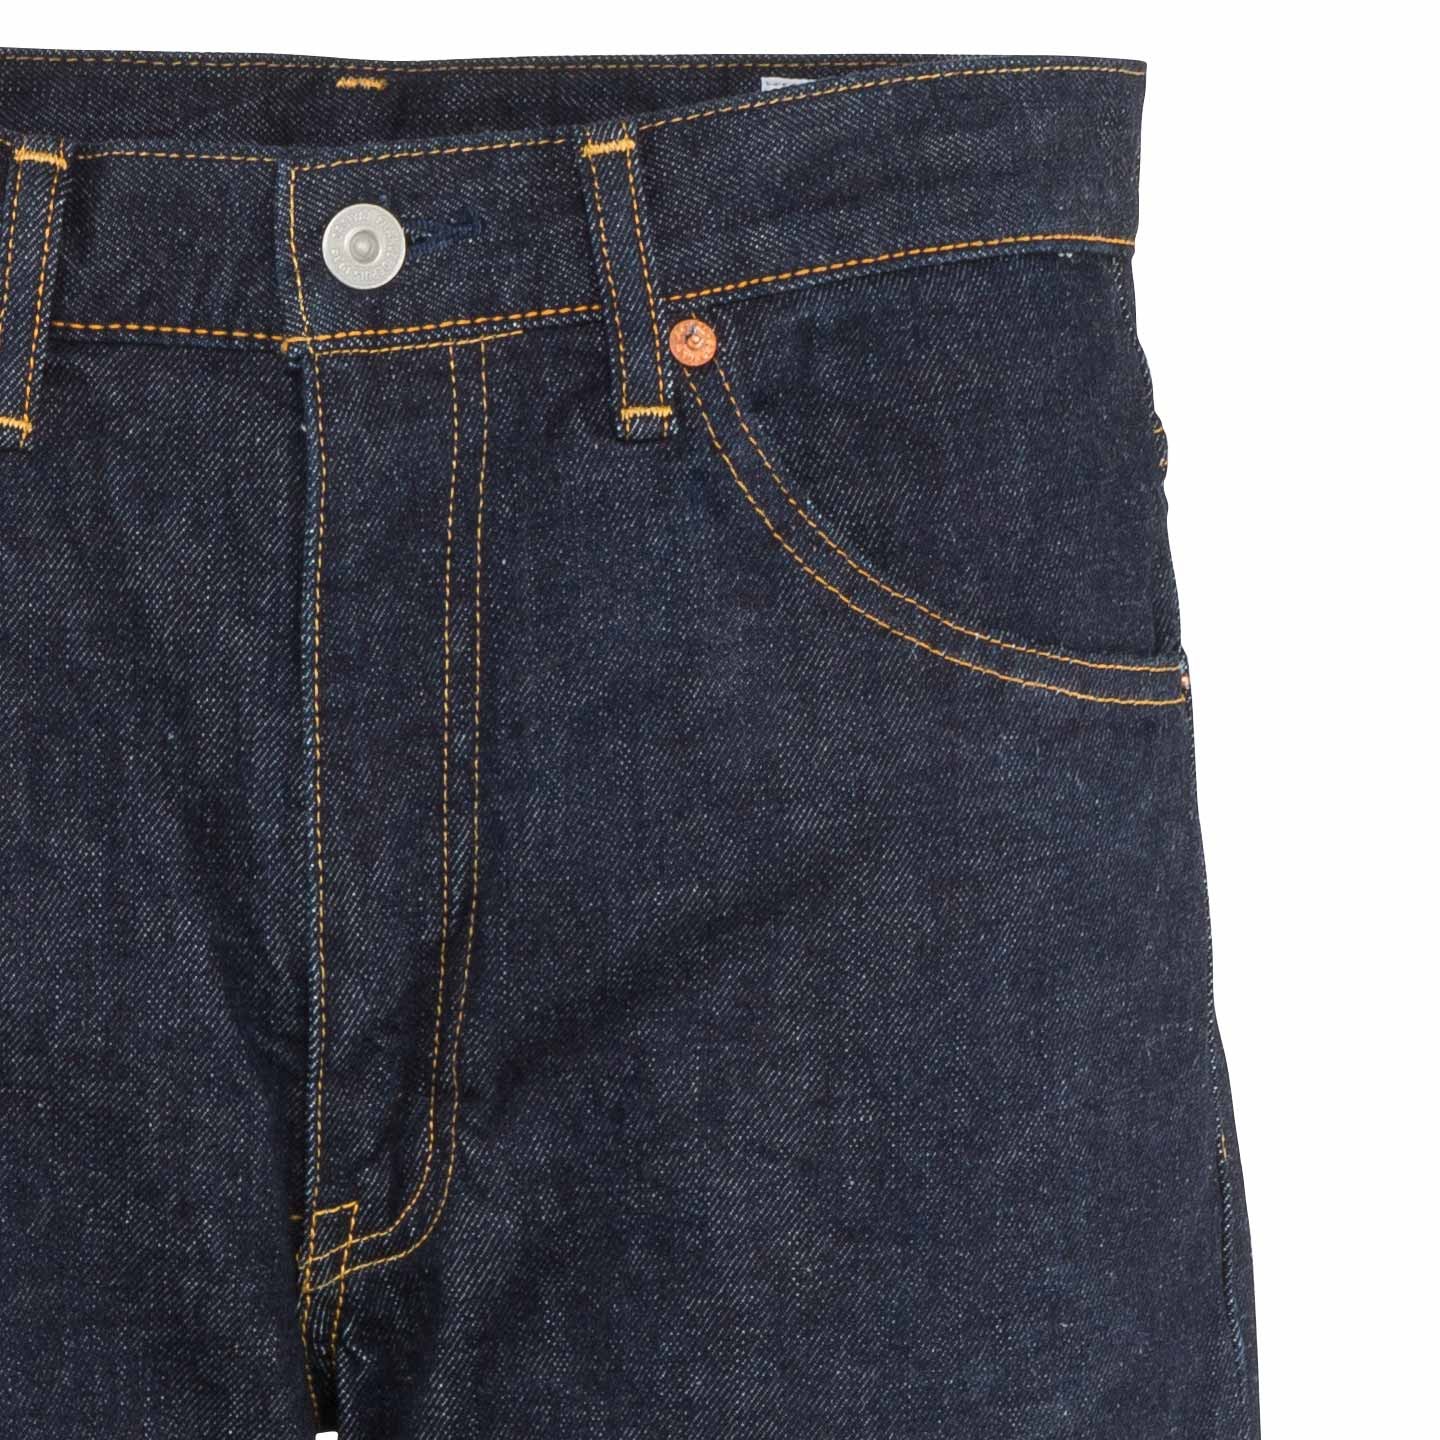 Jeans, Genuine denim slim fitting, unisex made in japan Orcival